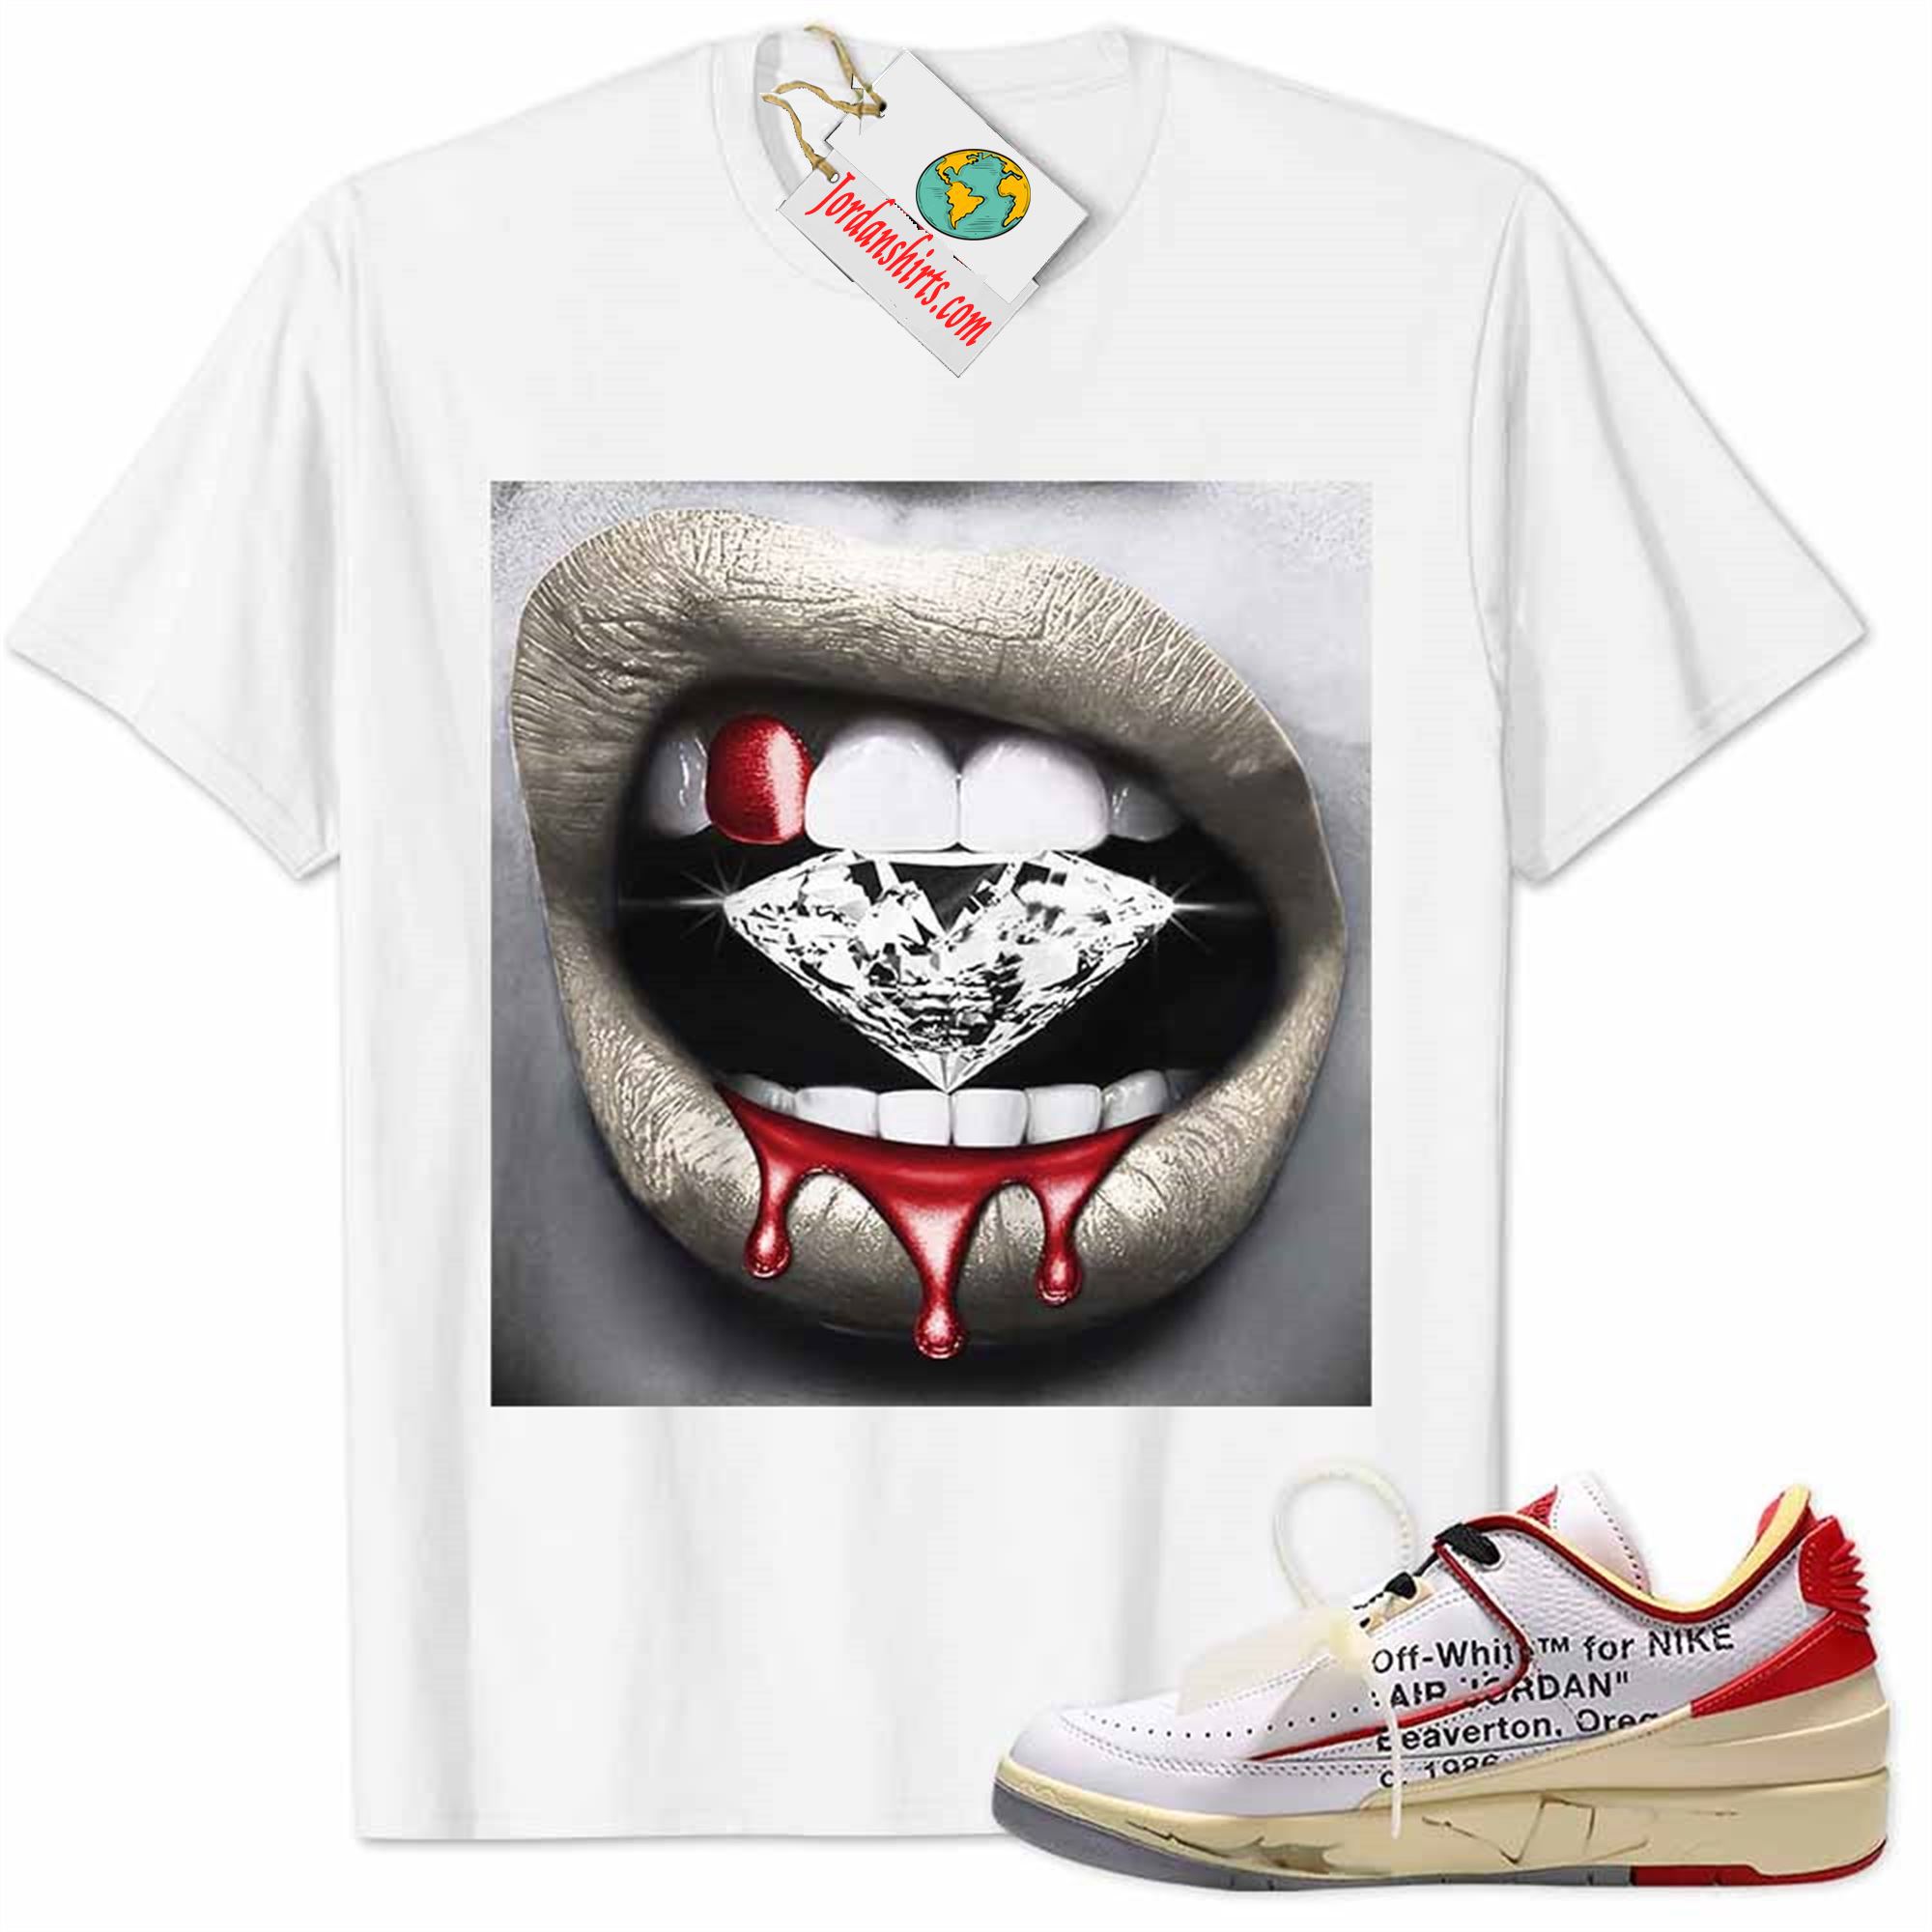 Jordan 2 Shirt, Jordan 2 Low White Red Off-white Shirt Sexy Lip Bite Diamond Dripping White Size Up To 5xl